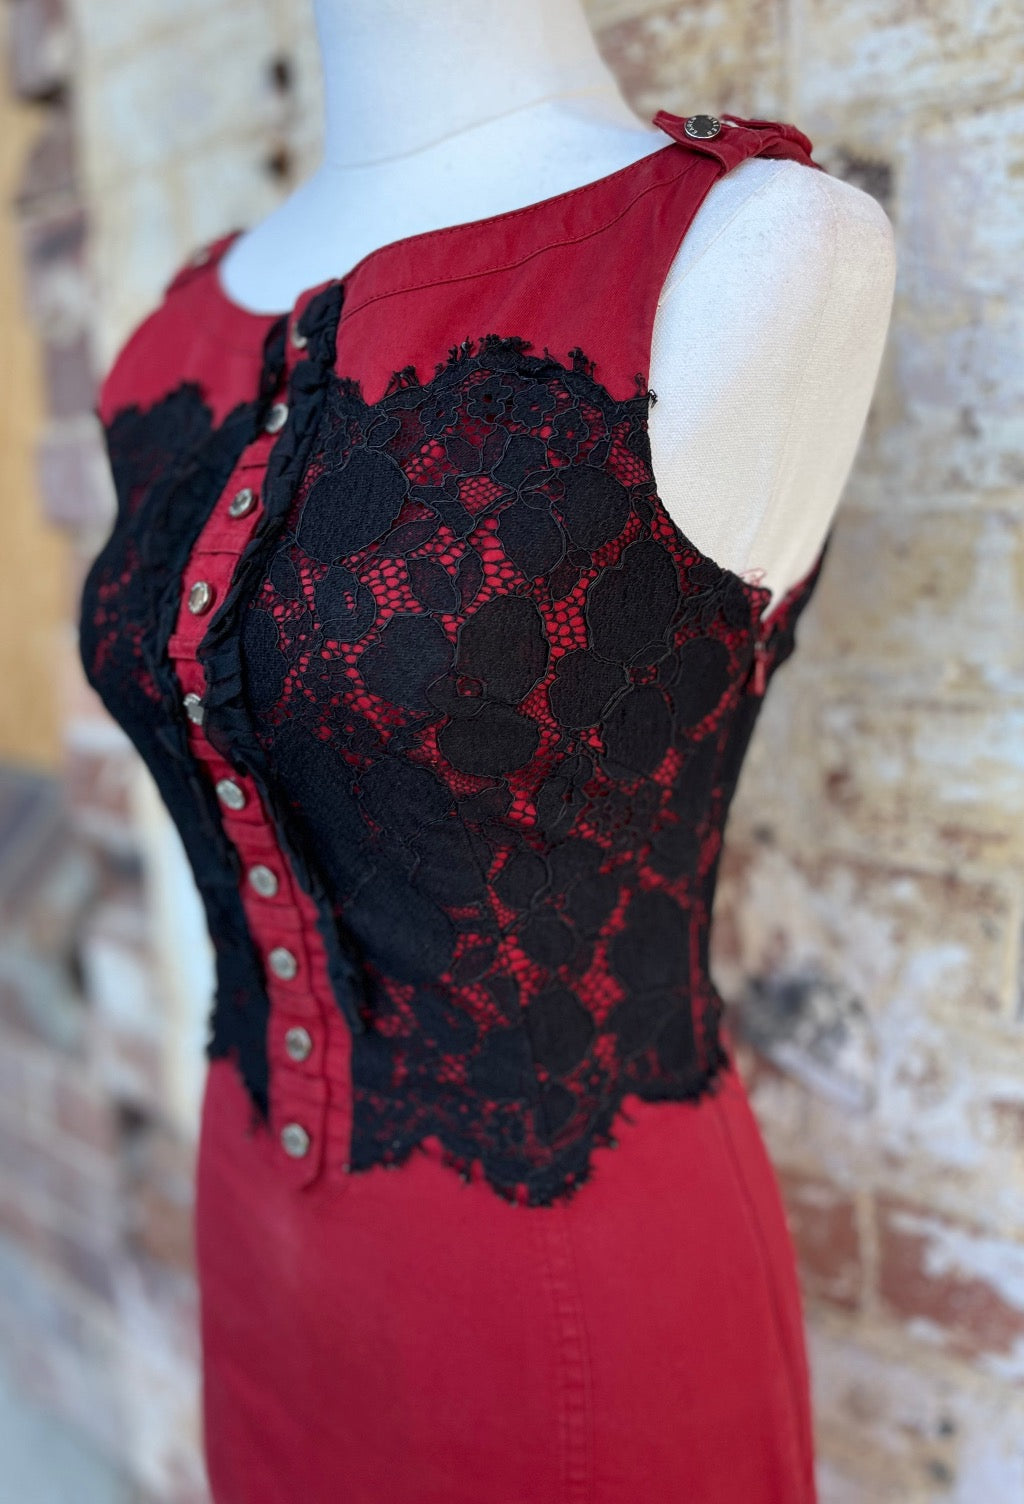 Karen Millen Red Fitted Dress (size UK 8)